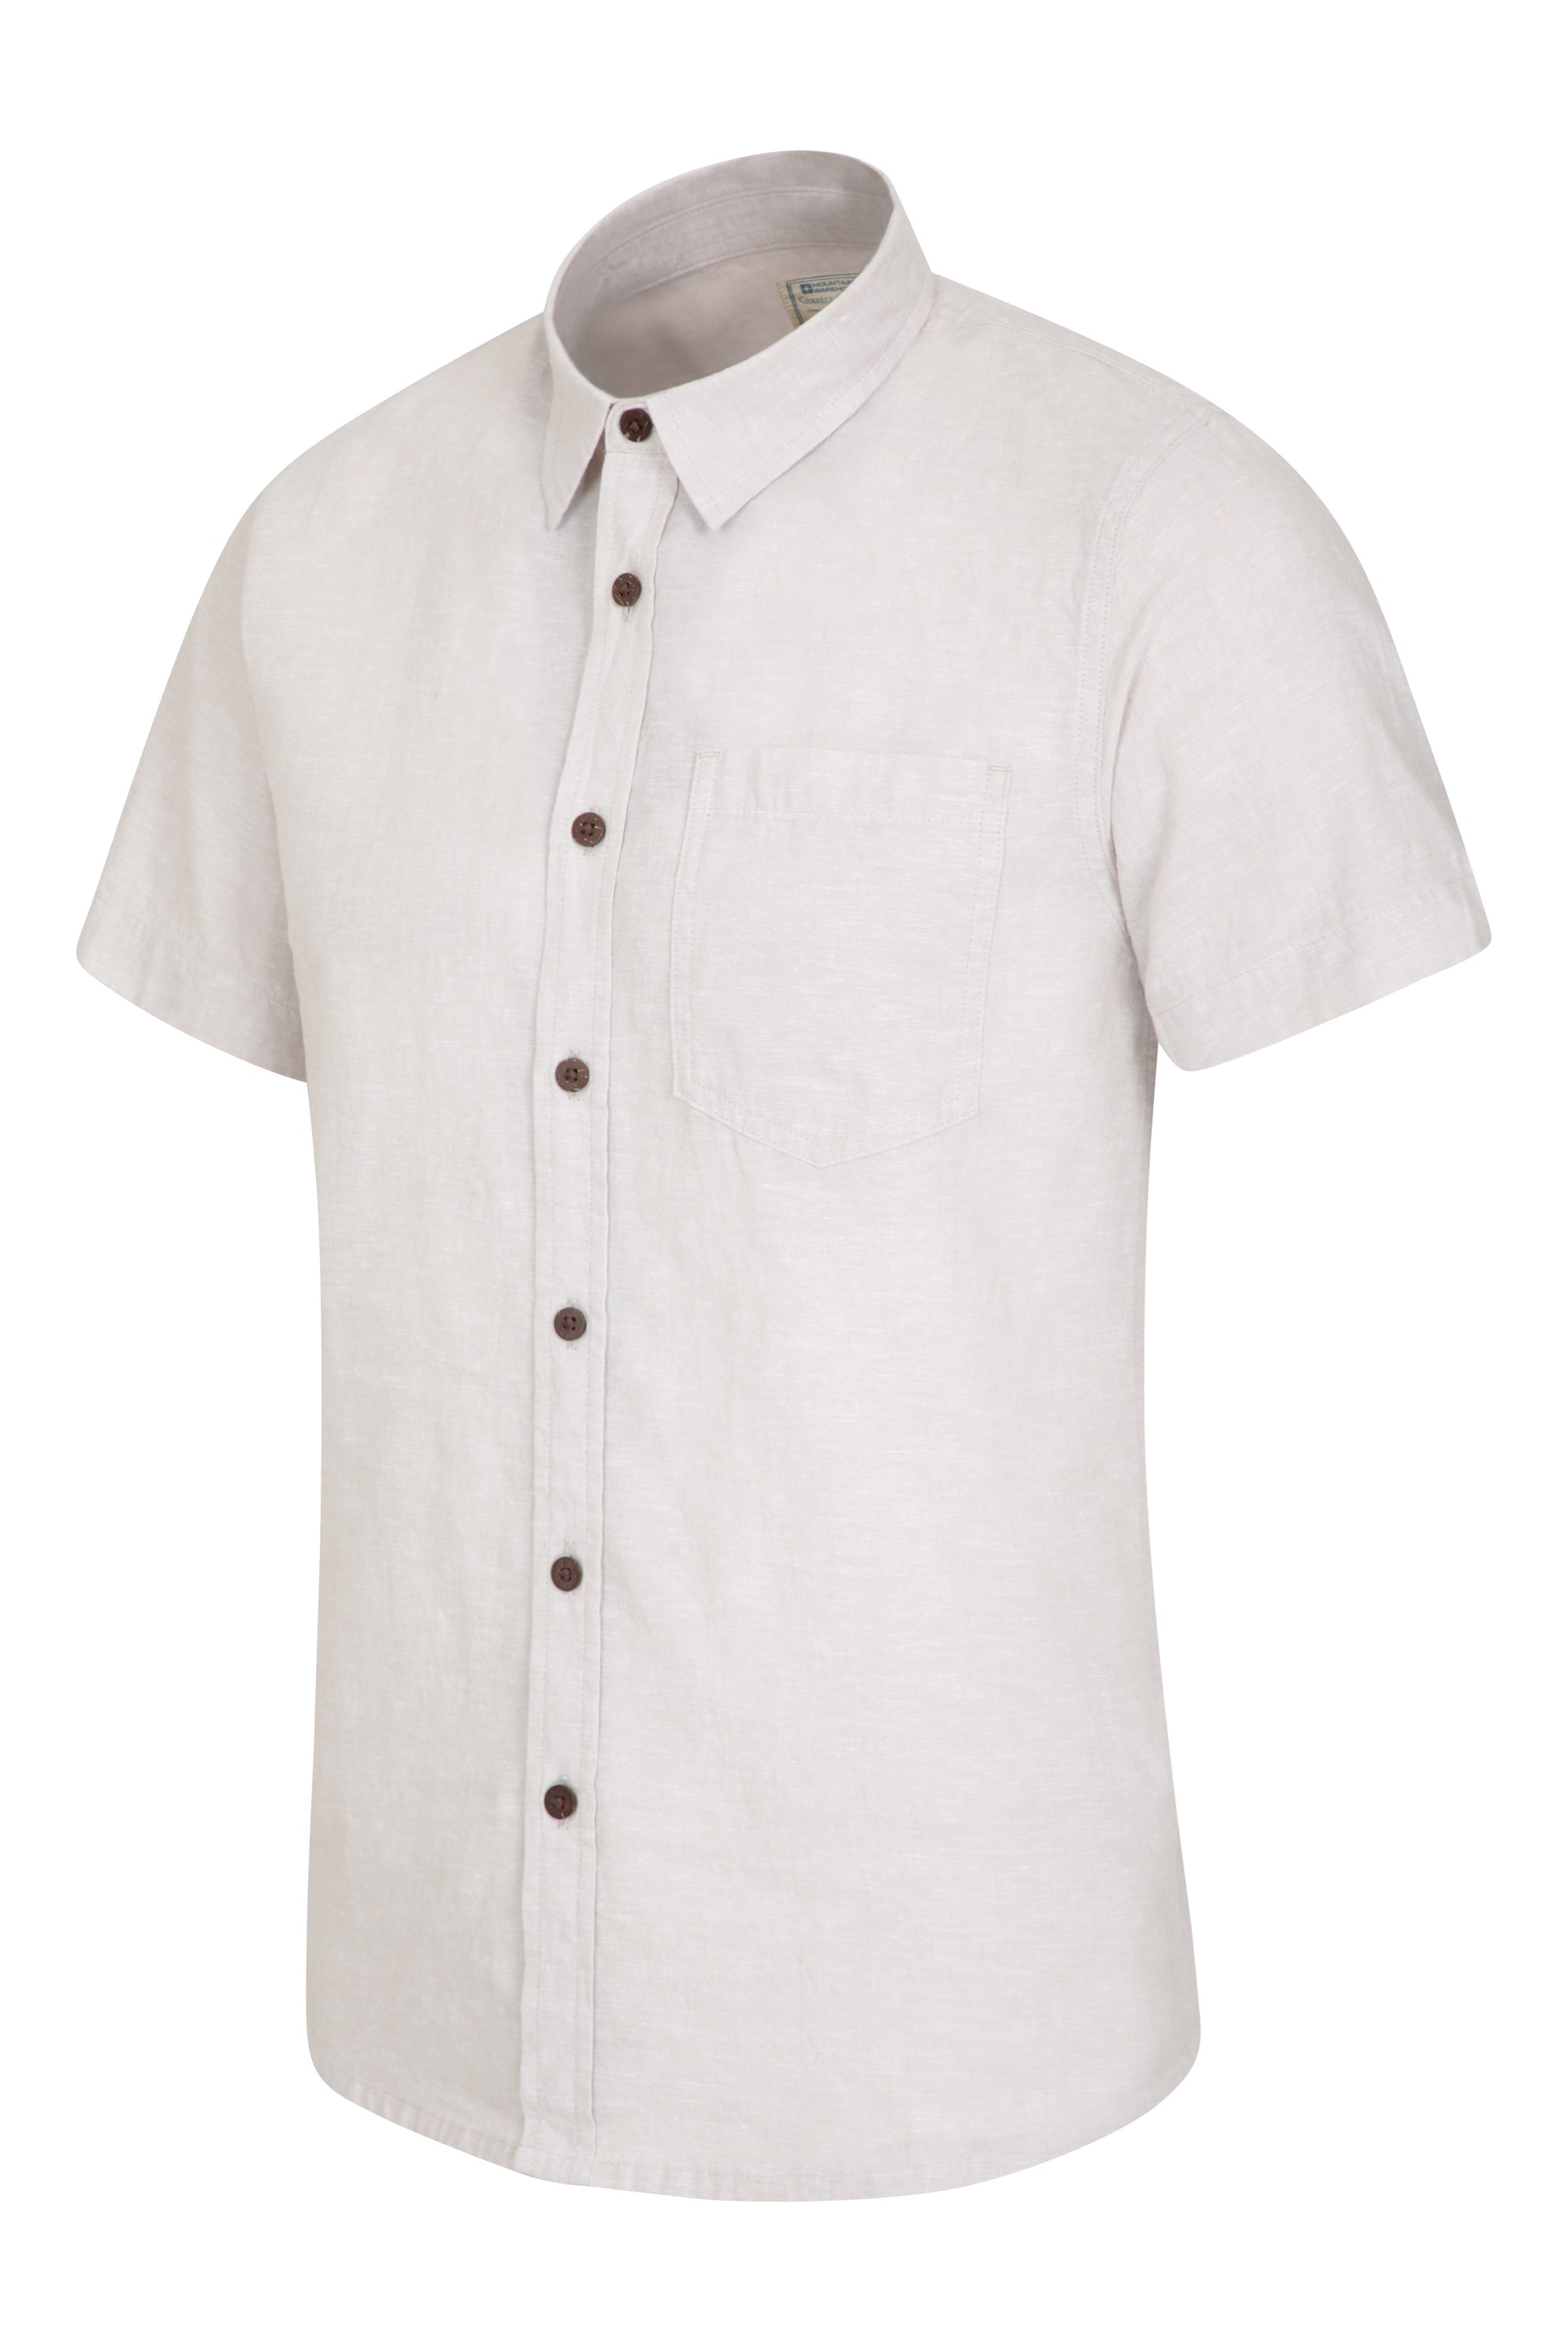 Mountain Warehouse Mountain Warehouse Bundle cotton/linen shirts age 13 M&S 